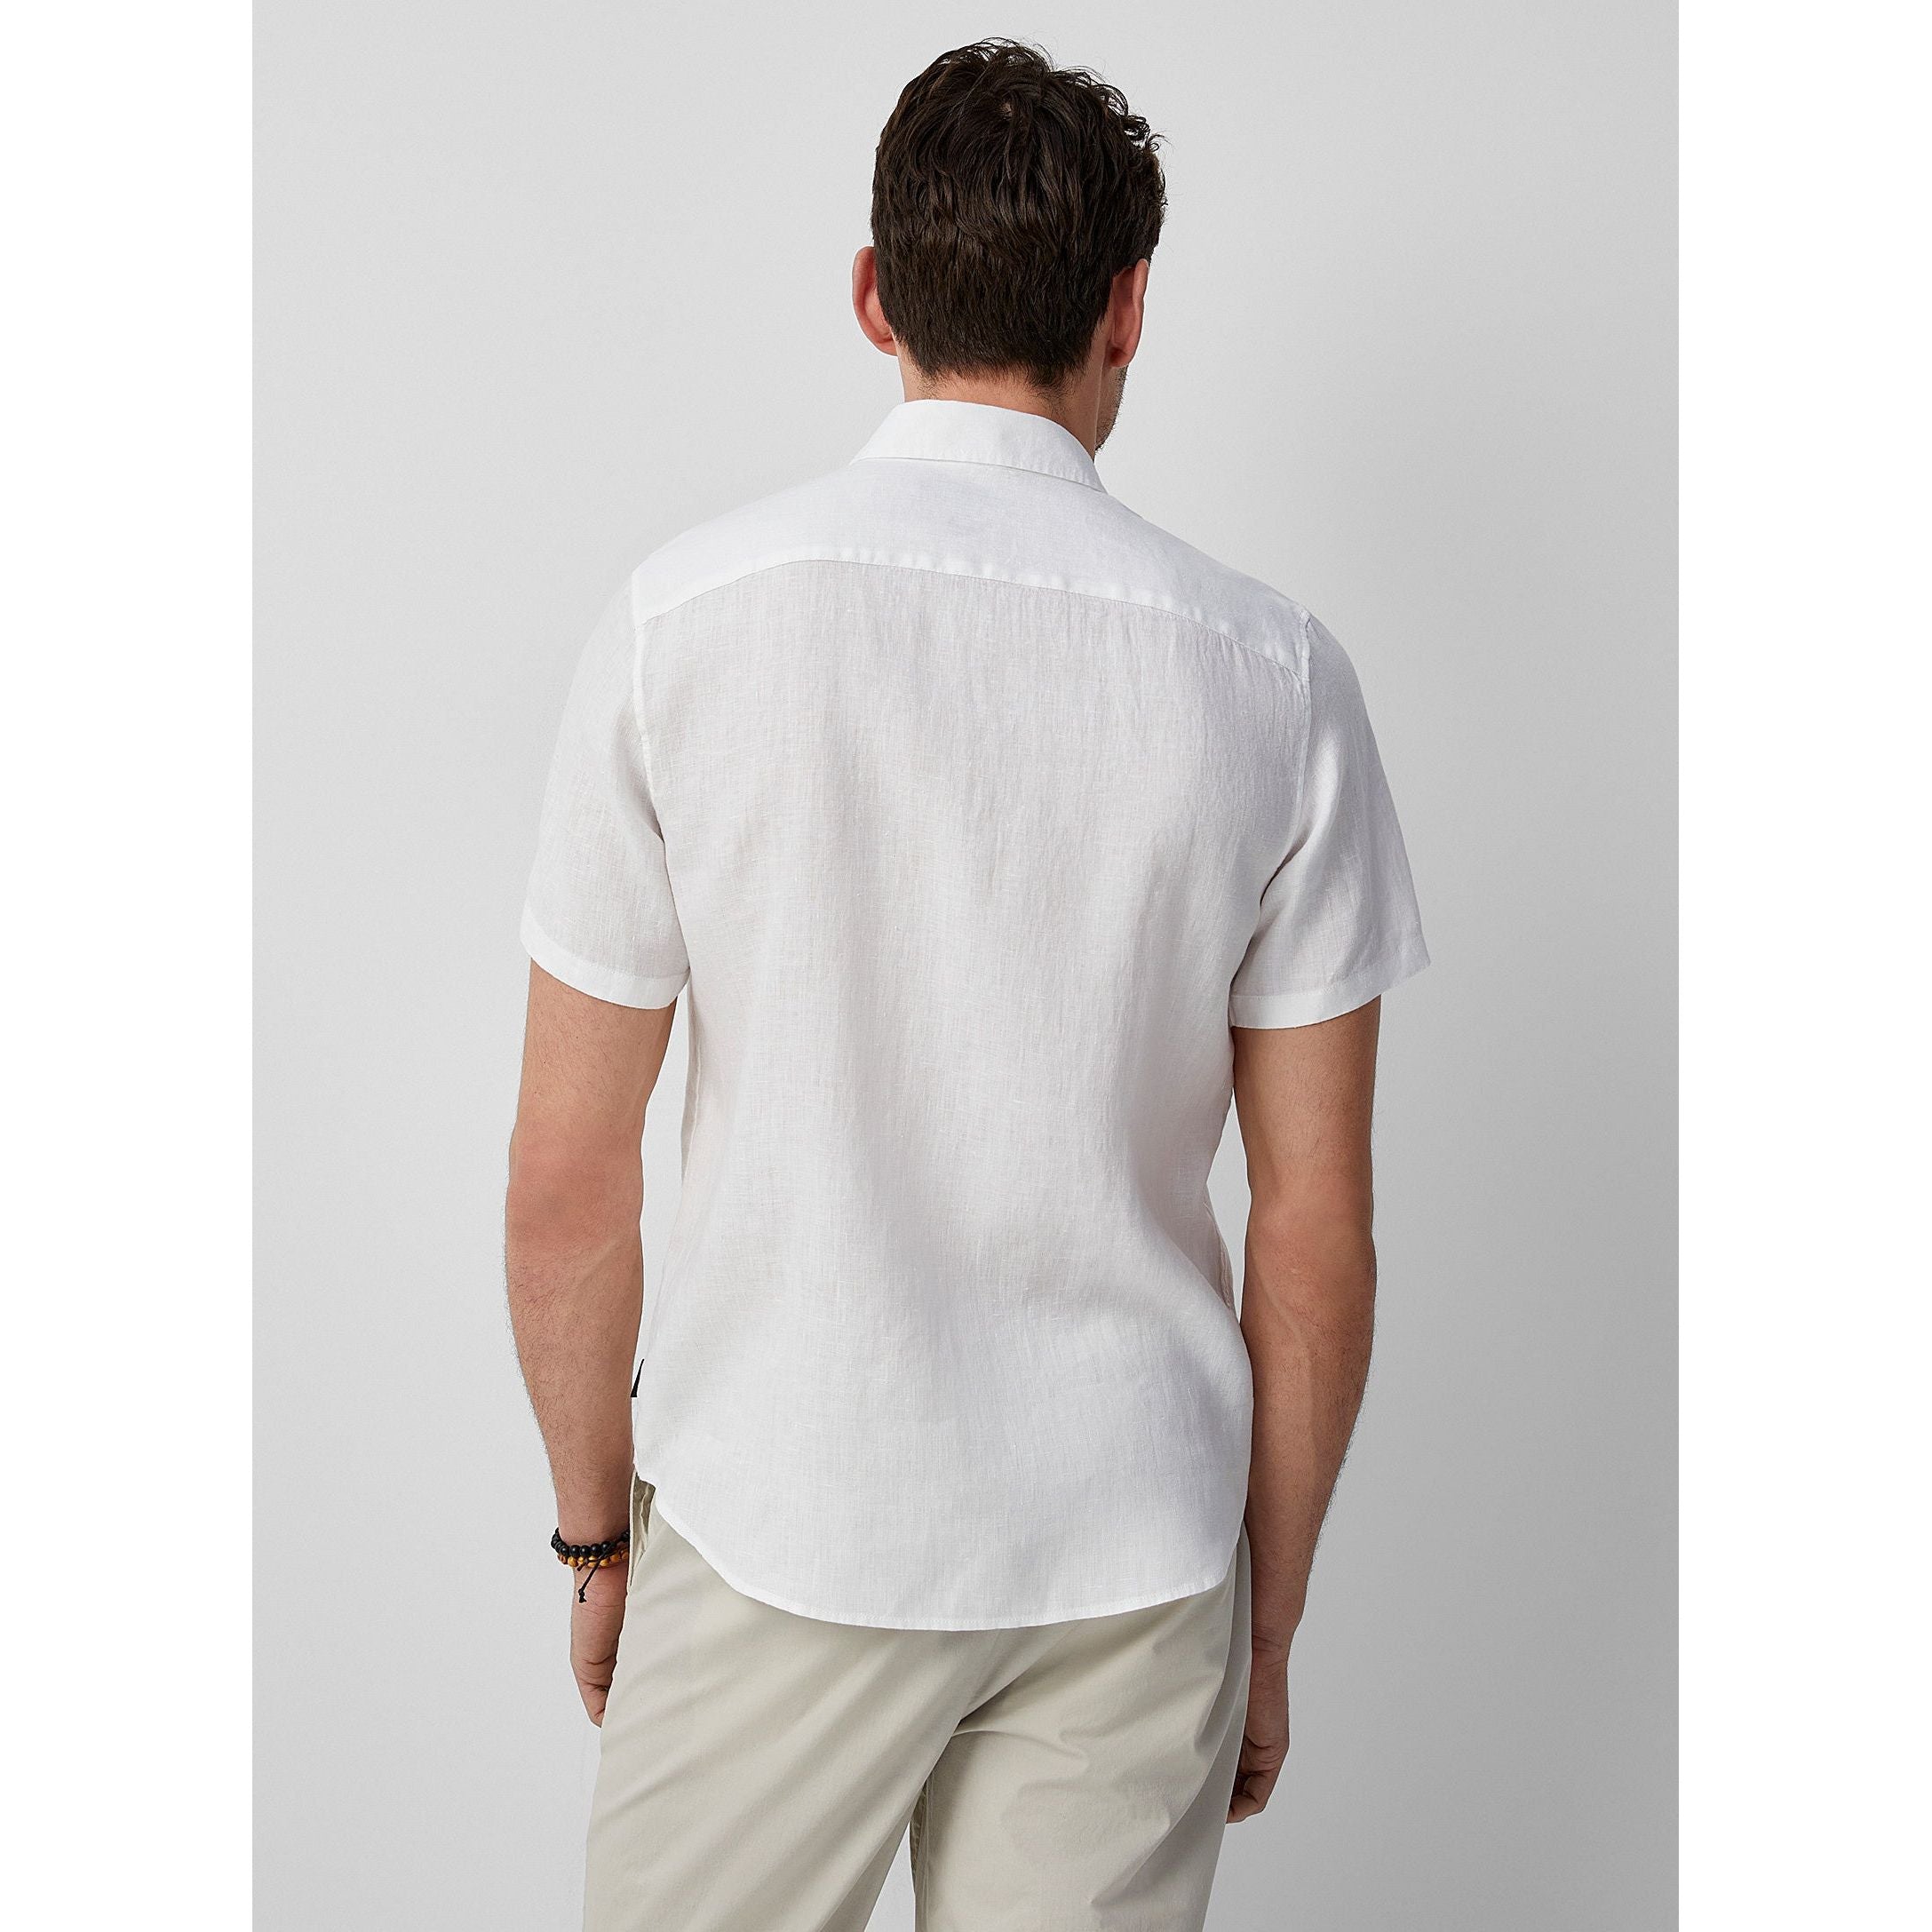 Micheal Kors - Linen Shirt in White